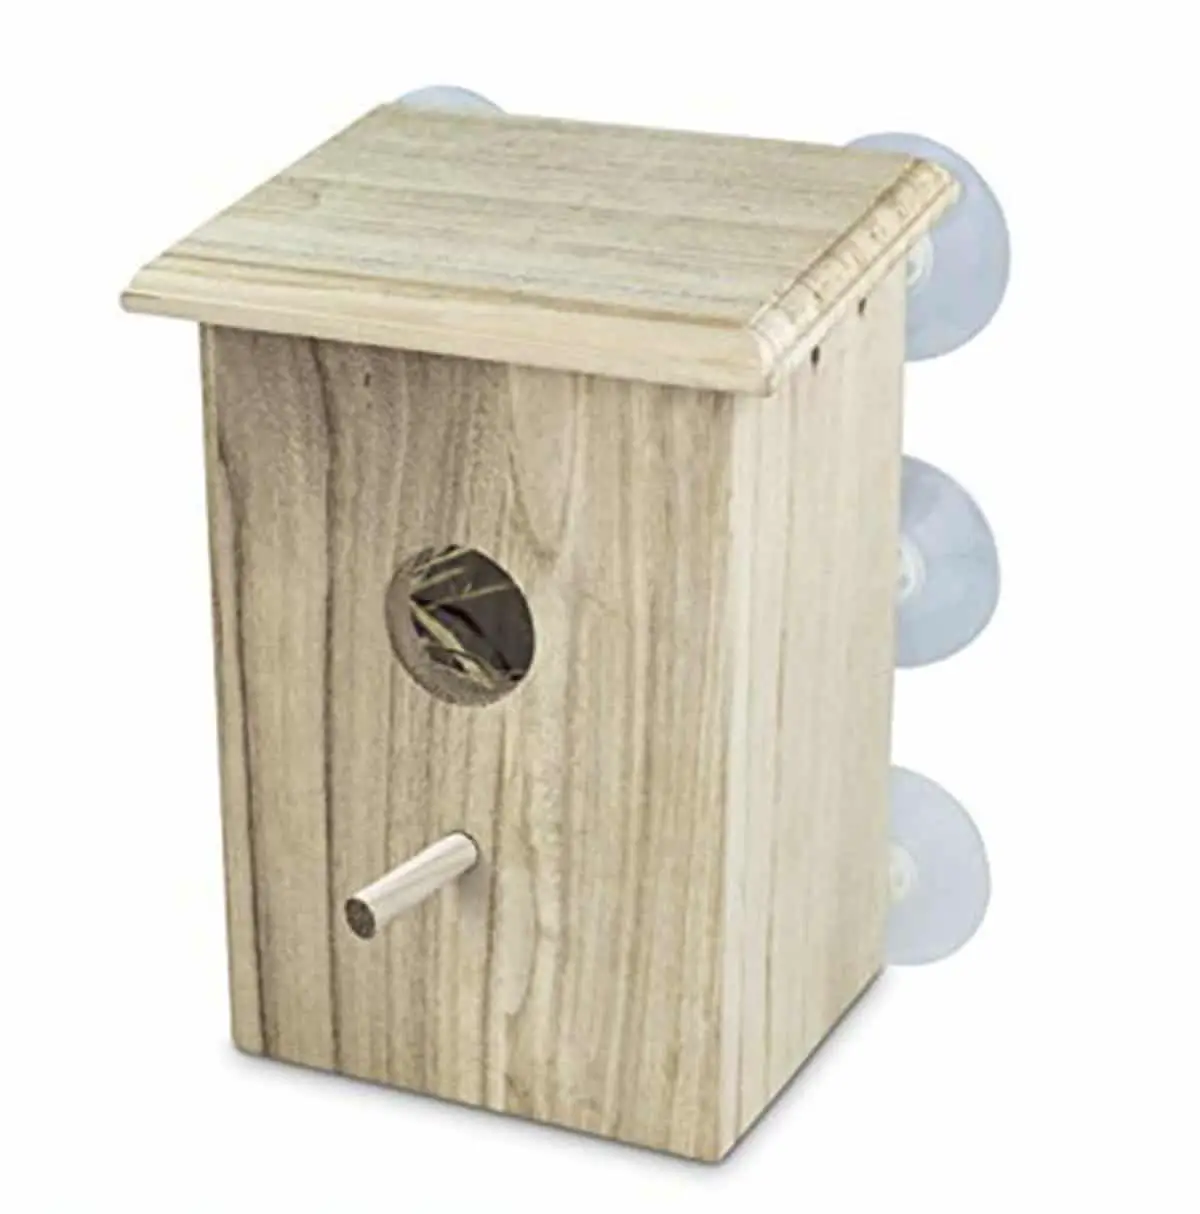 4 X nuevo de madera Caja de nido tradicional Nido de Pájaro Casa pequeñas aves bluetit Robin